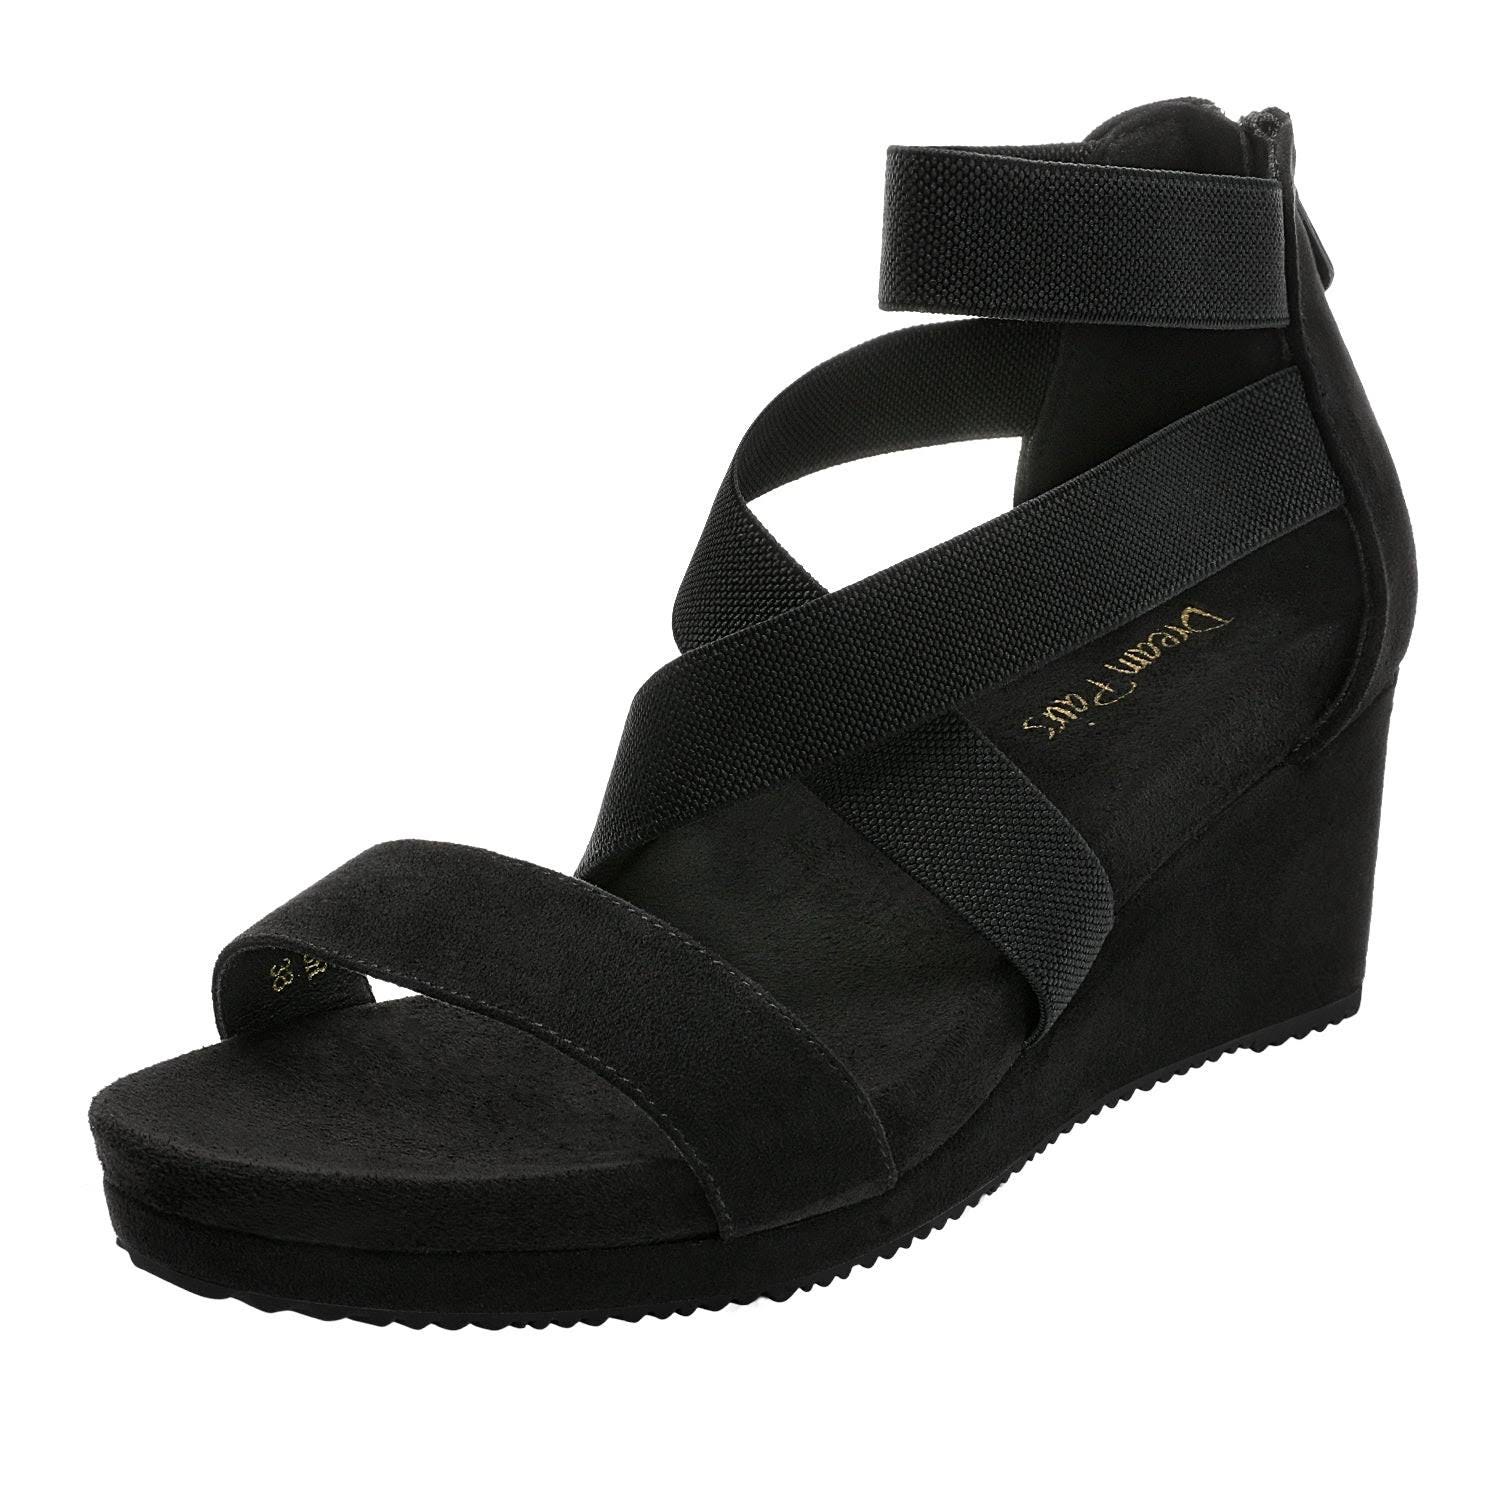 Comfortable Black Platform Sandals with Criss-Cross Strap | Image